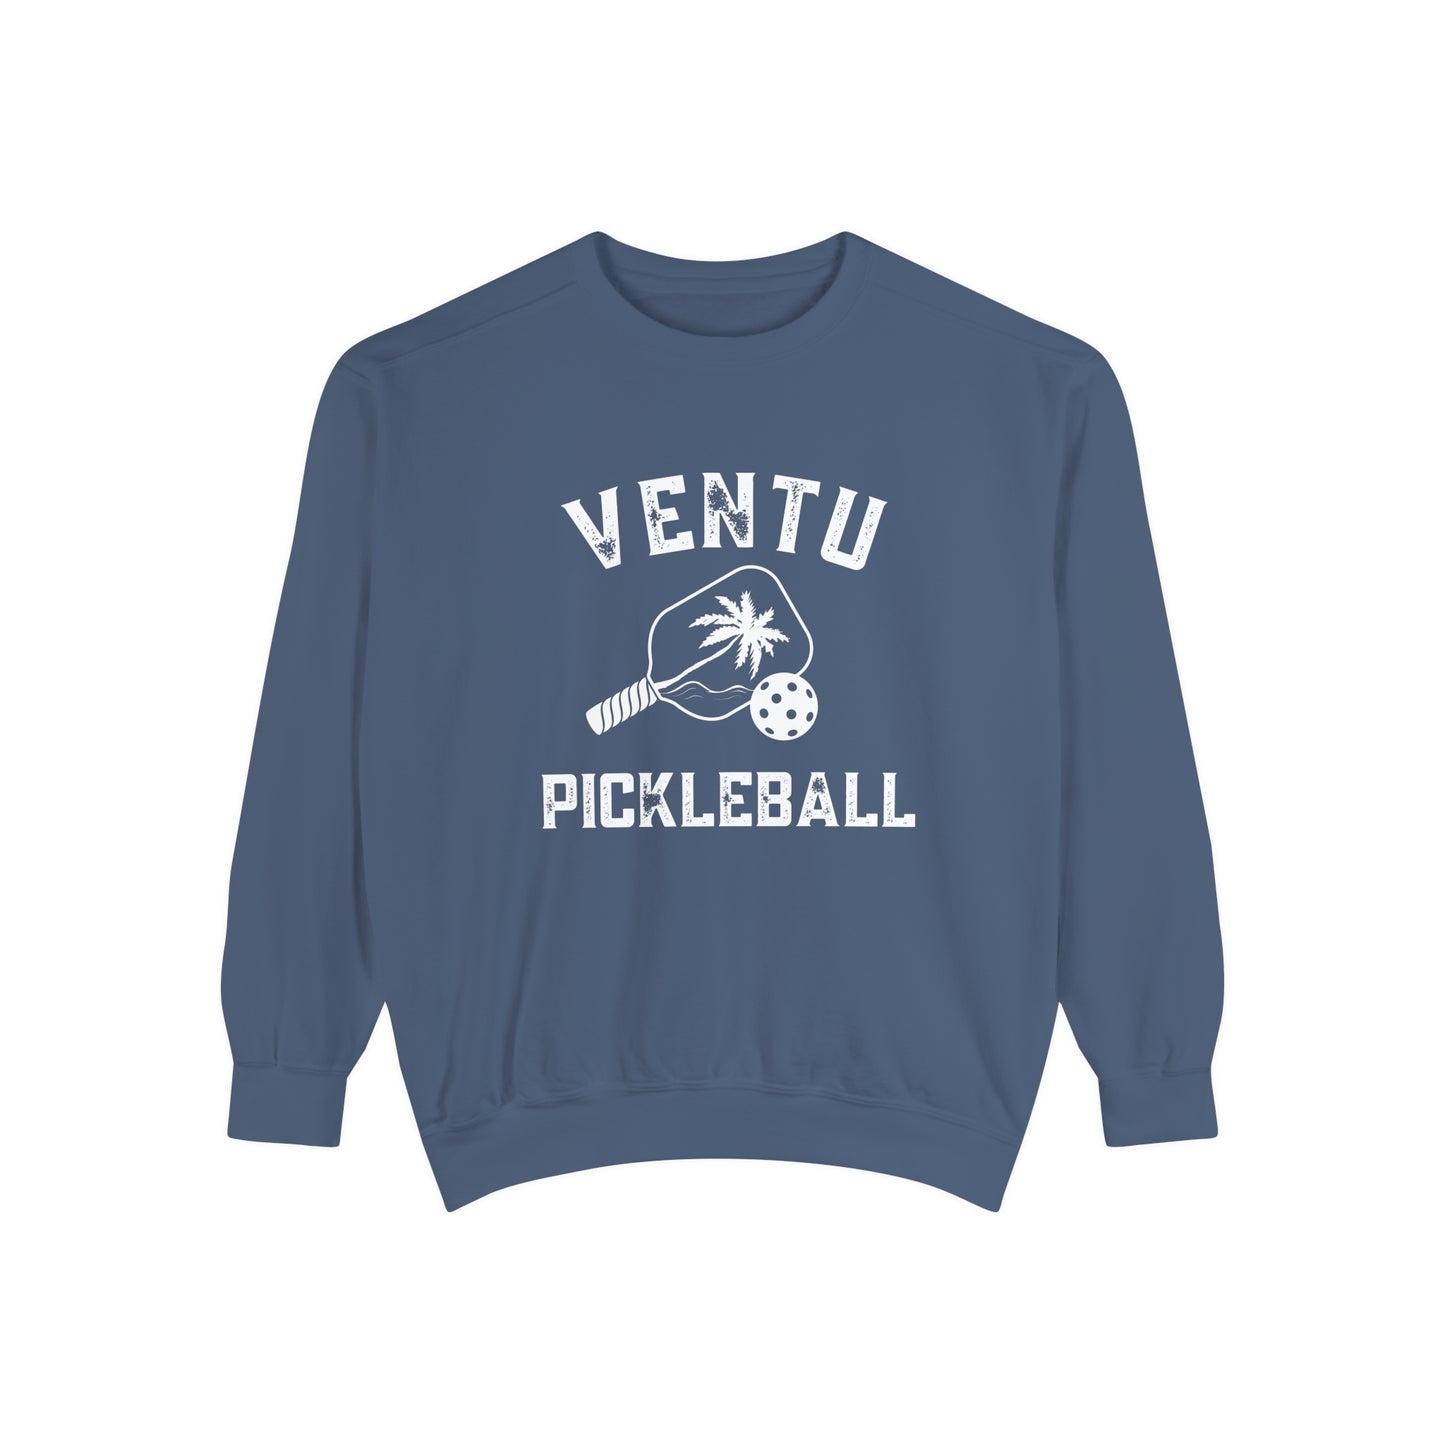 Ventu Pickleball - Crew Sweatshirts - Comfort Colors